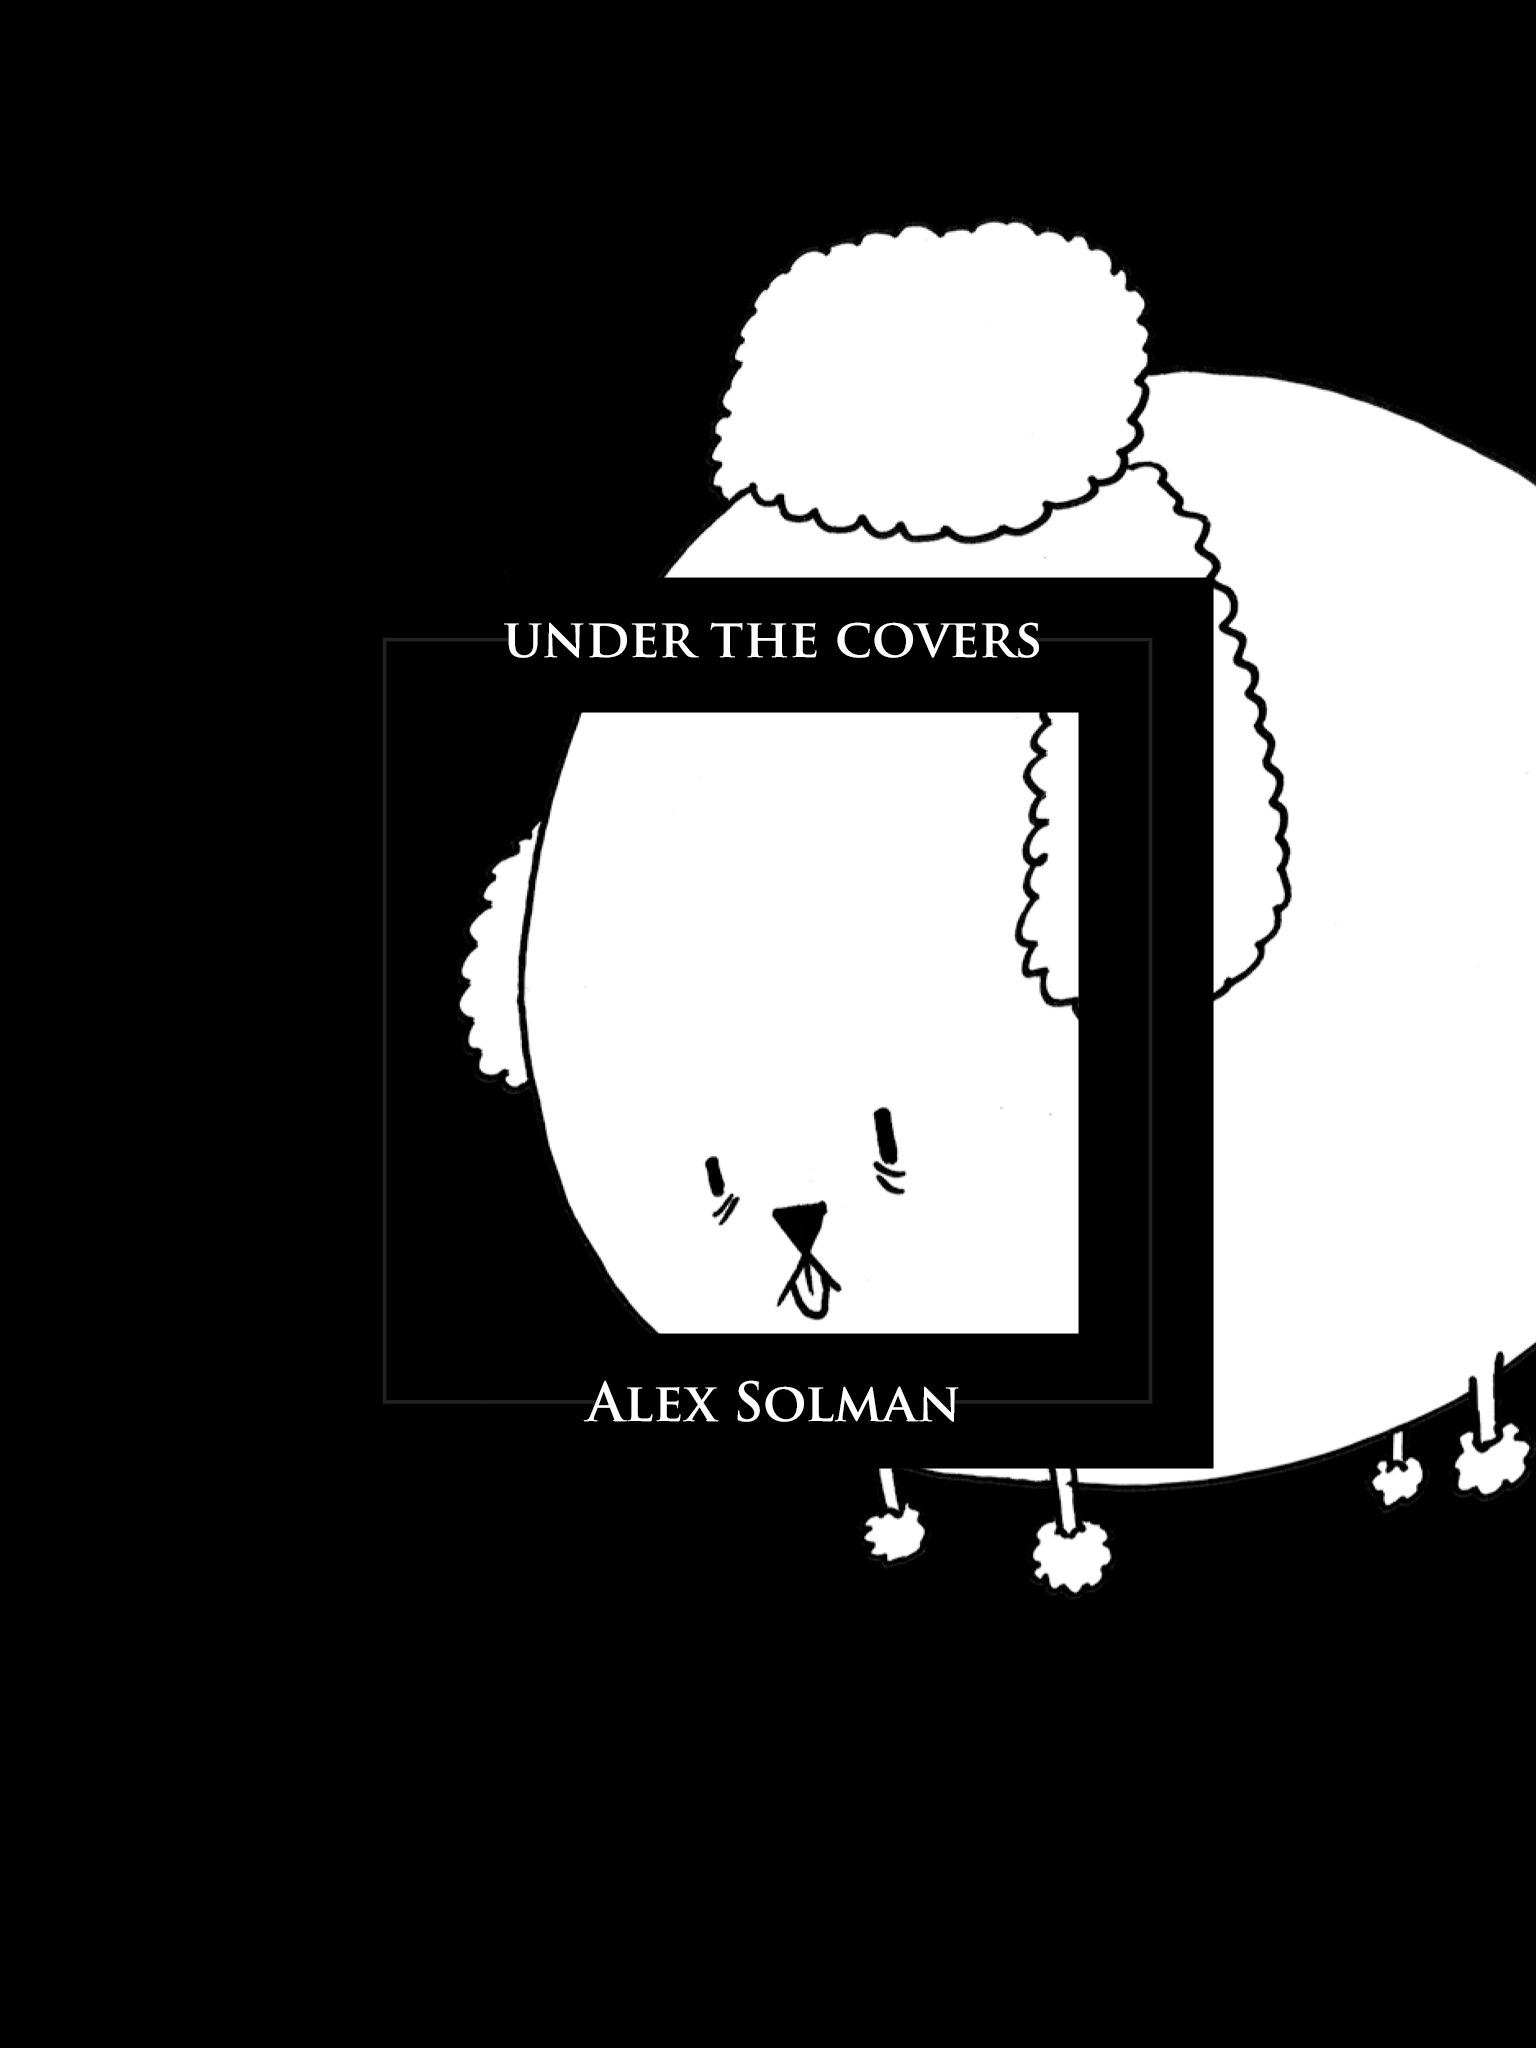 Under the covers: Alex Solman